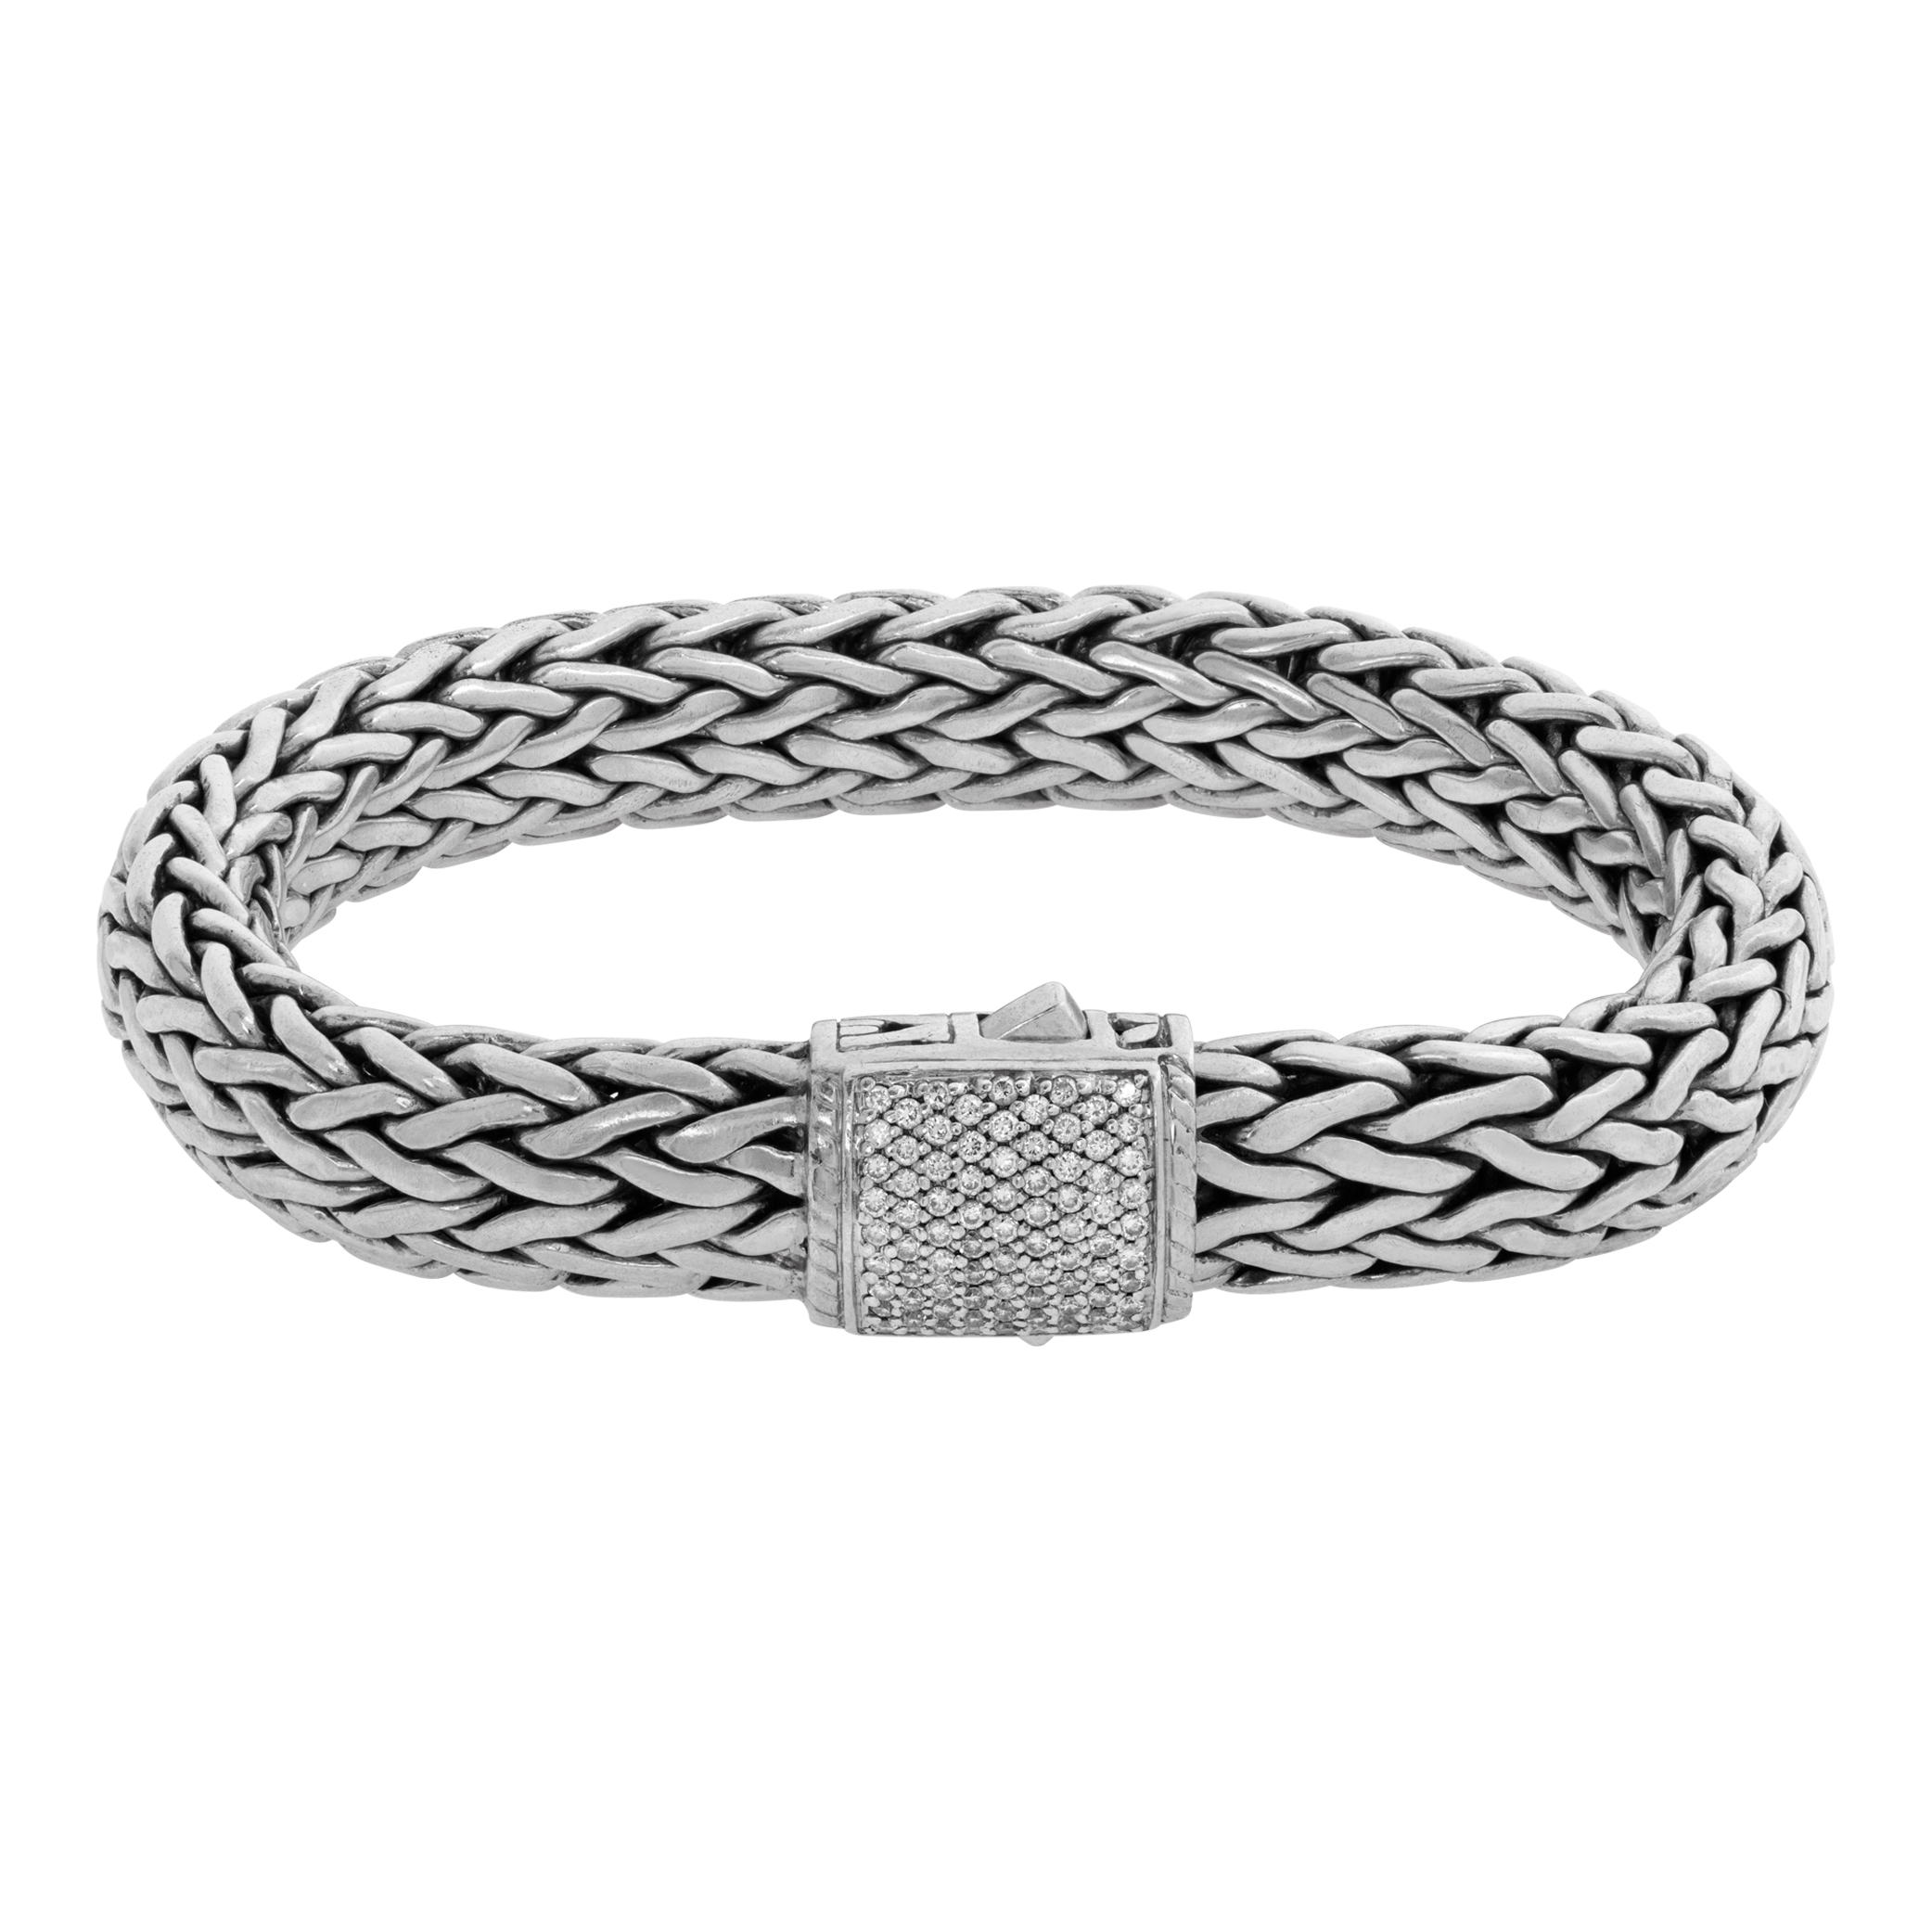 John Hardy Classic Chain bracelet in sterling silver w/ pave diamonds (Stones)